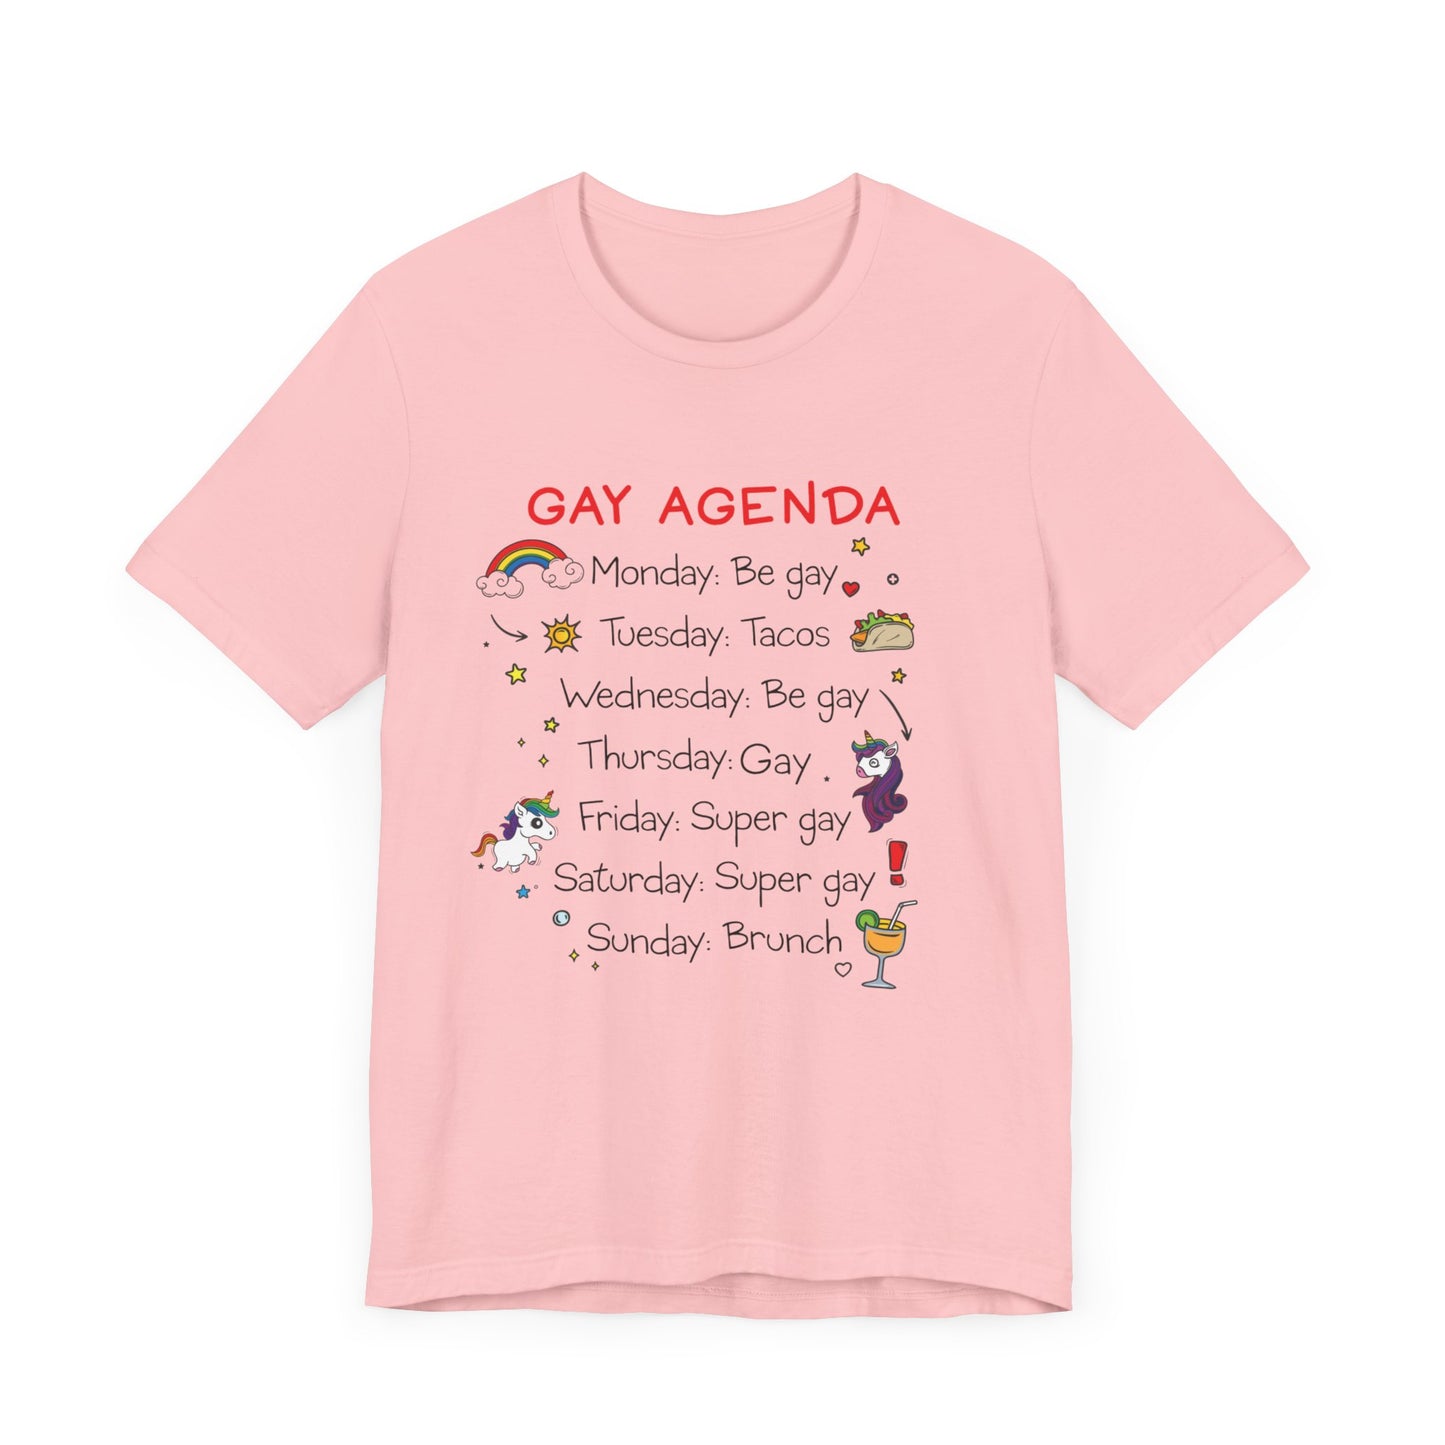 The Gay Agenda